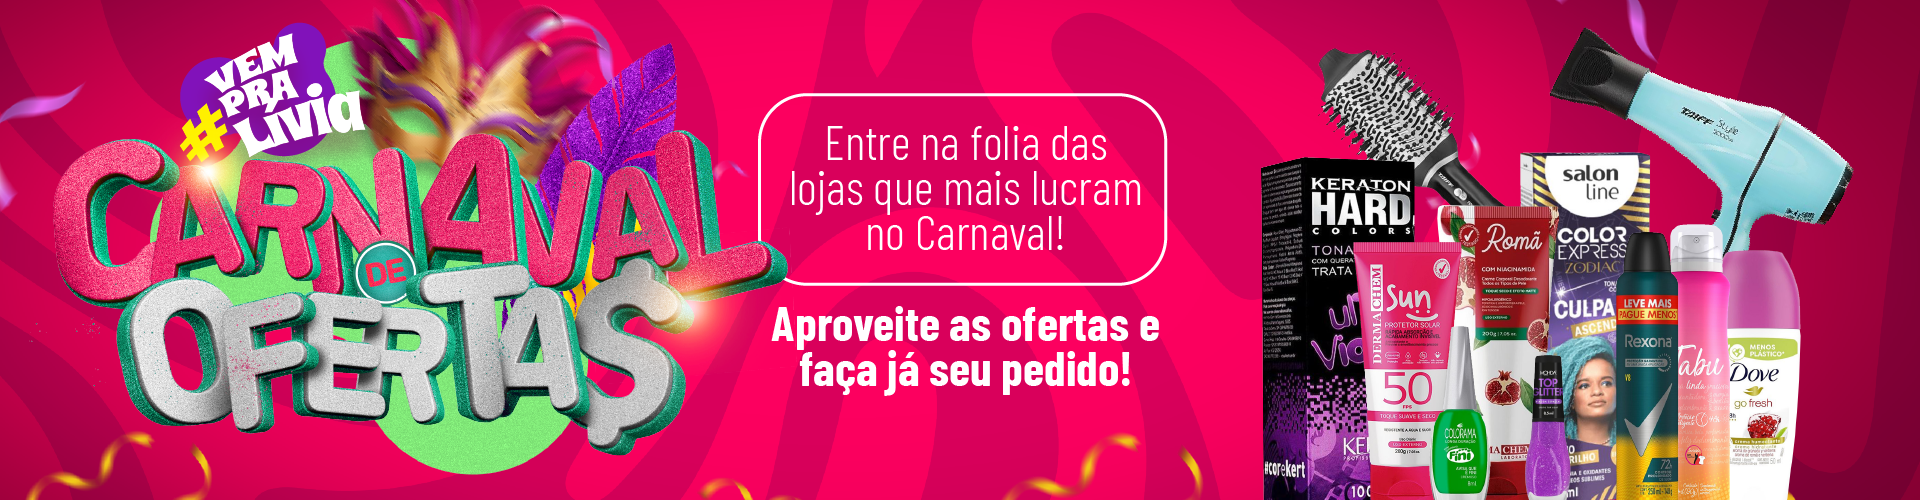 [DH] Carnaval de ofertas